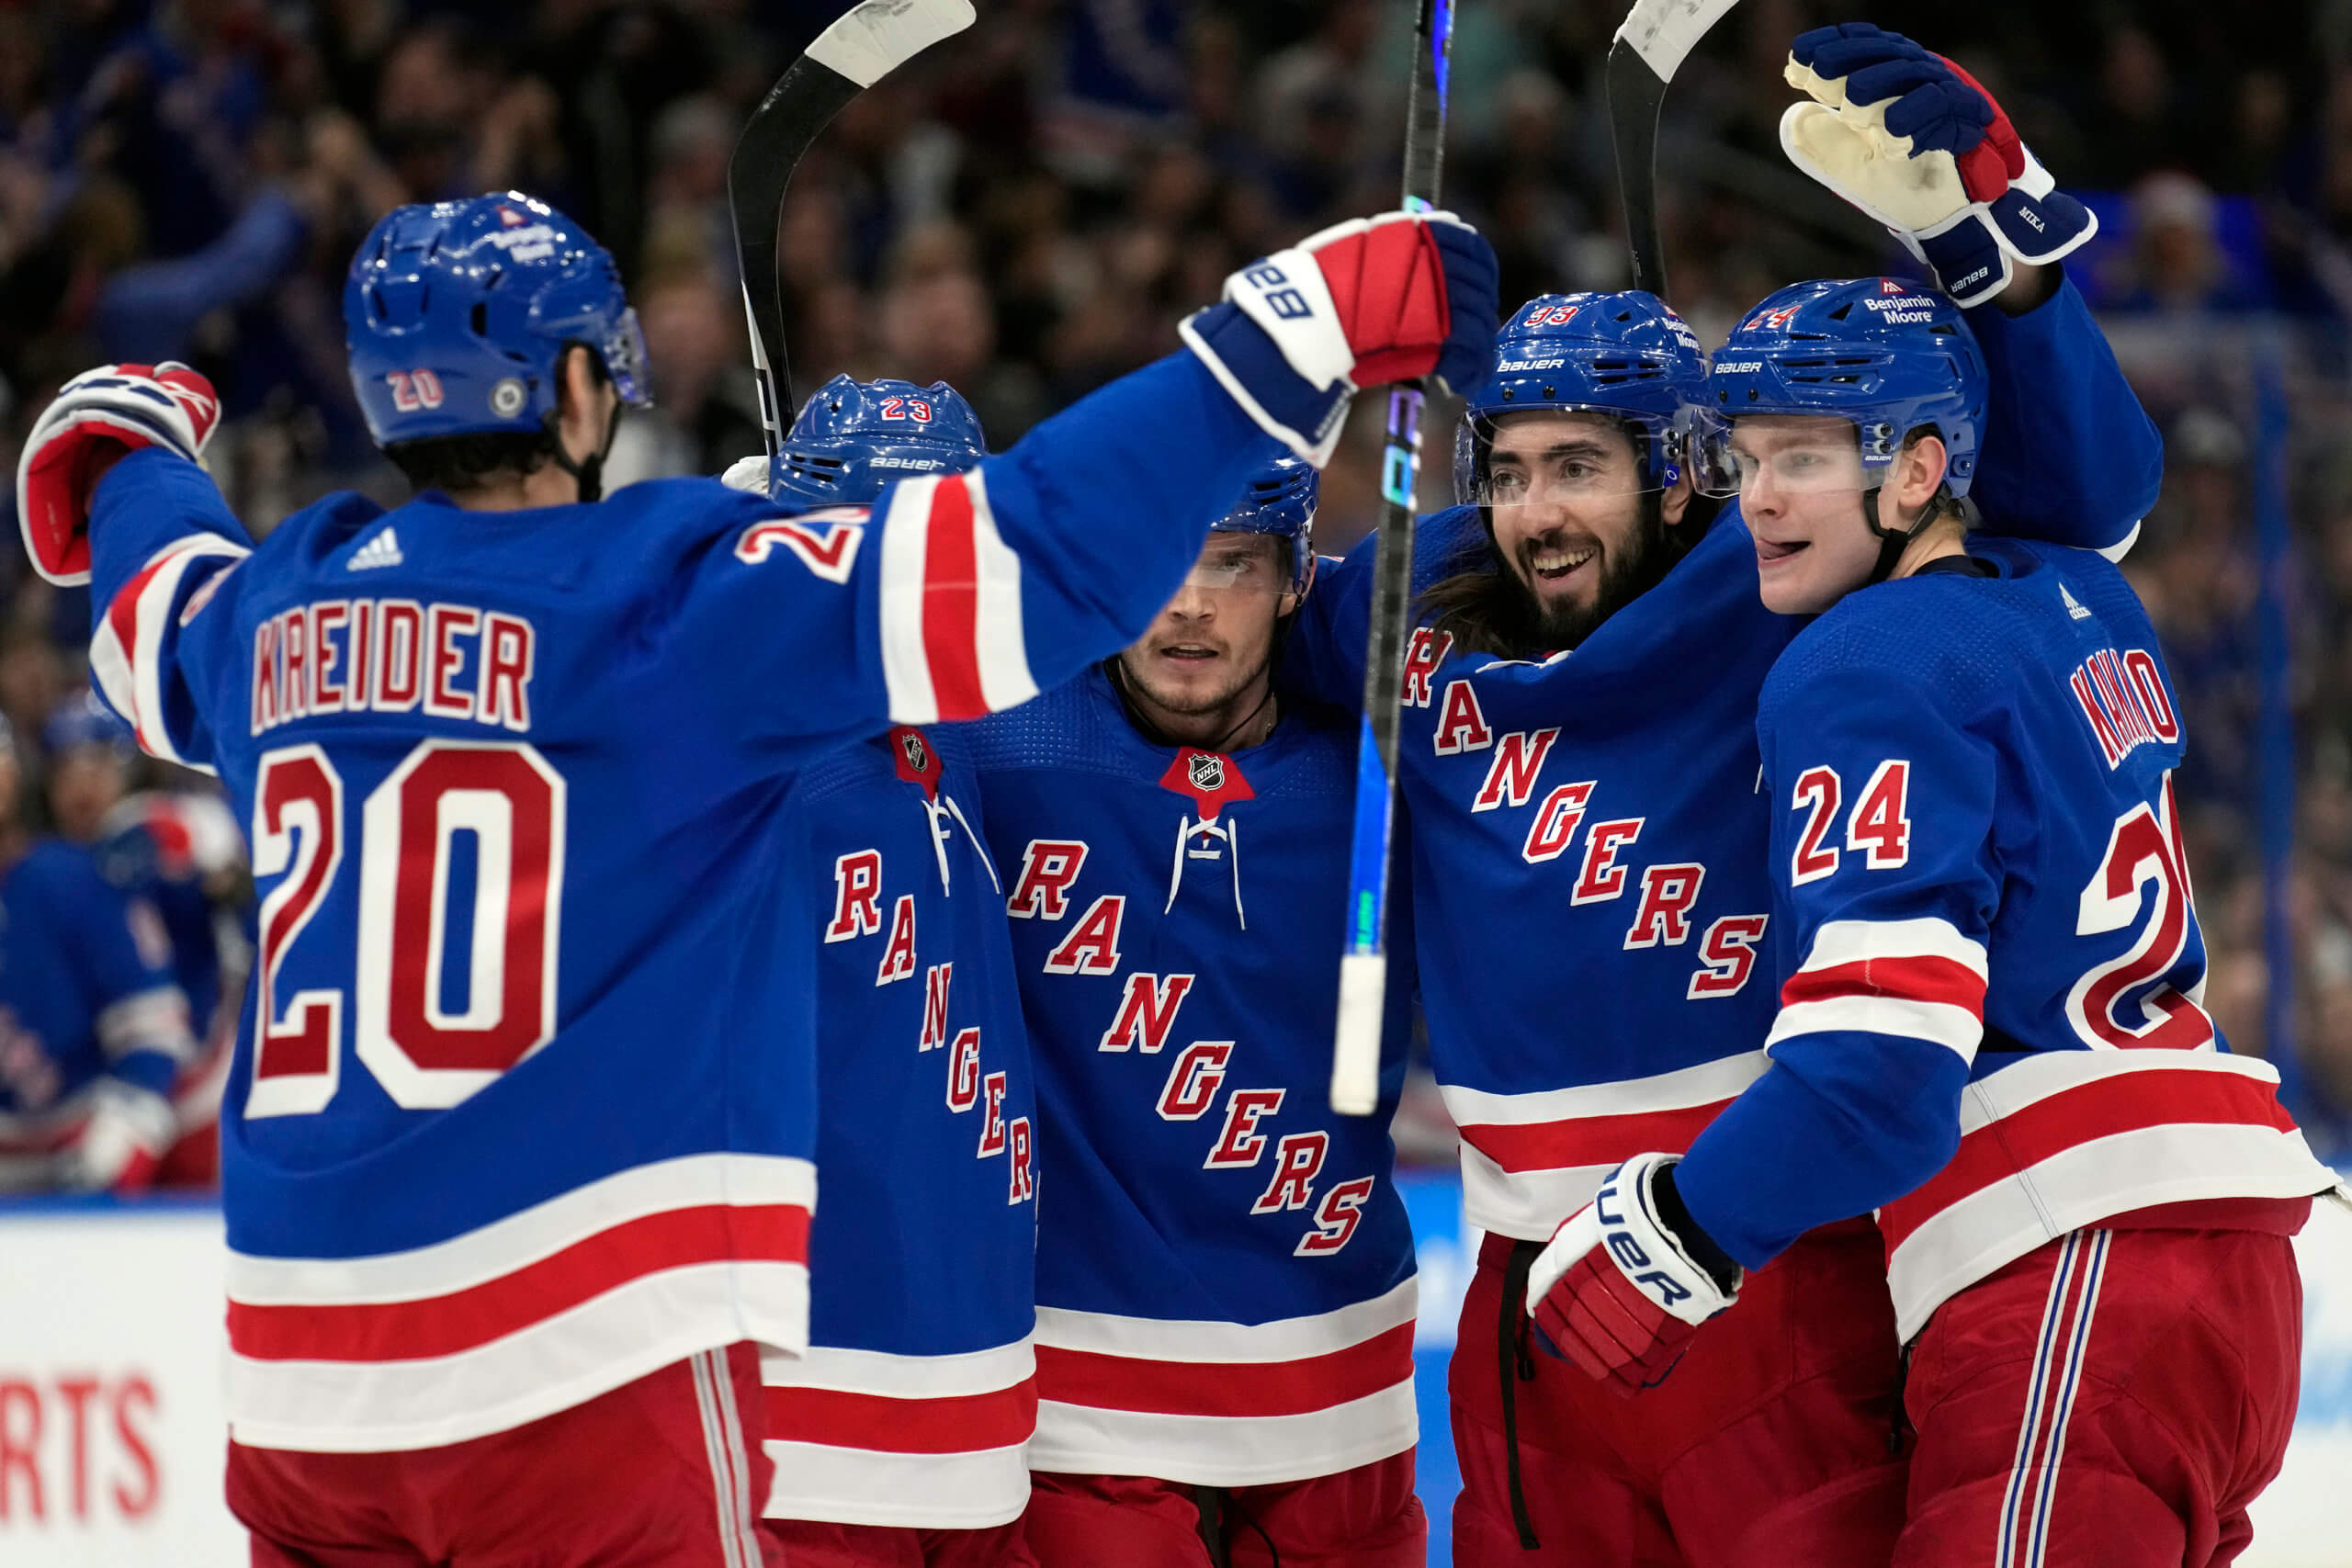 New York Islanders comeback in third again, knocking off Rangers